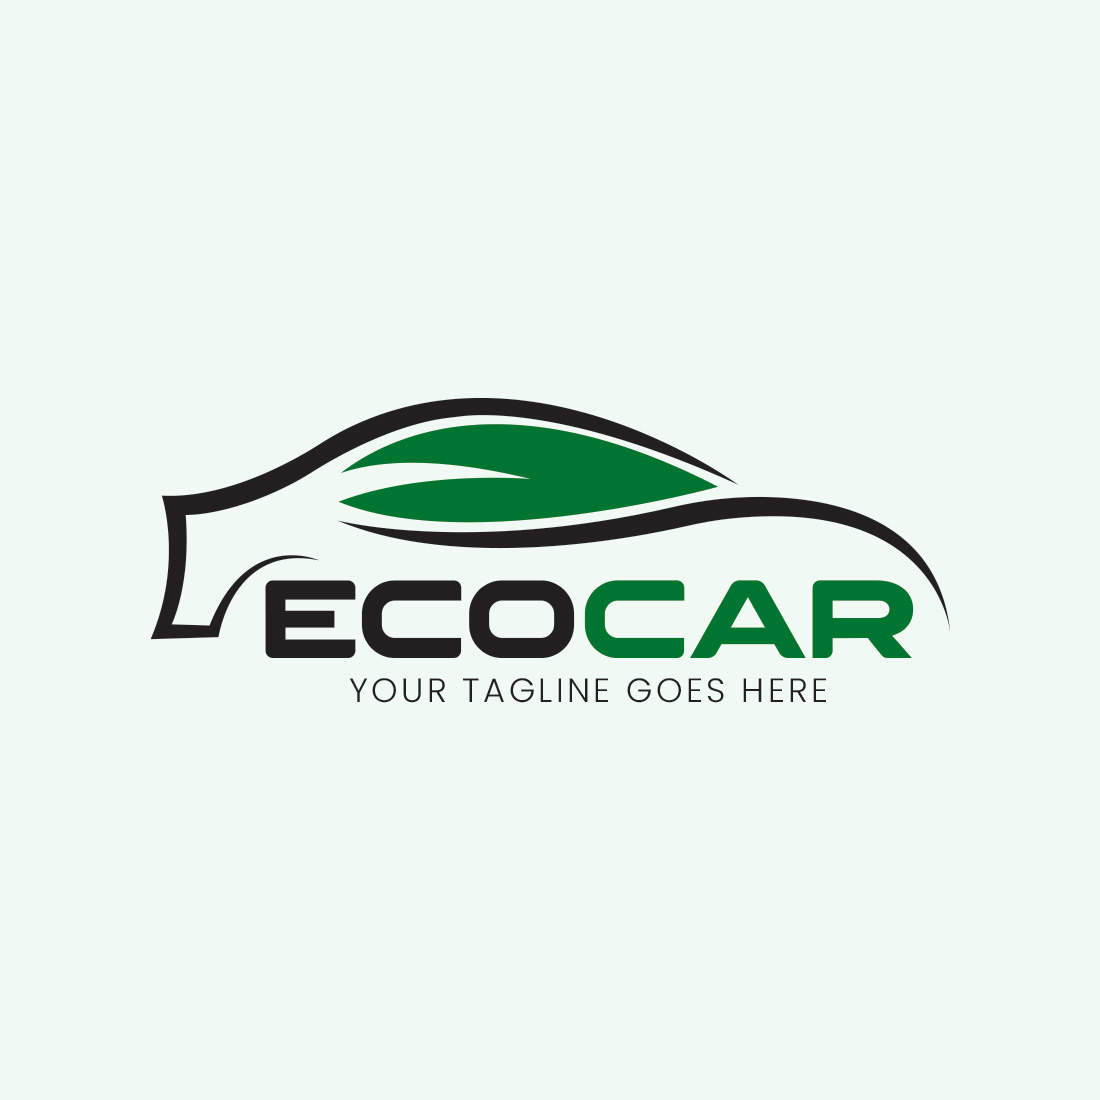 Eco Car Logo Green Template cover image.